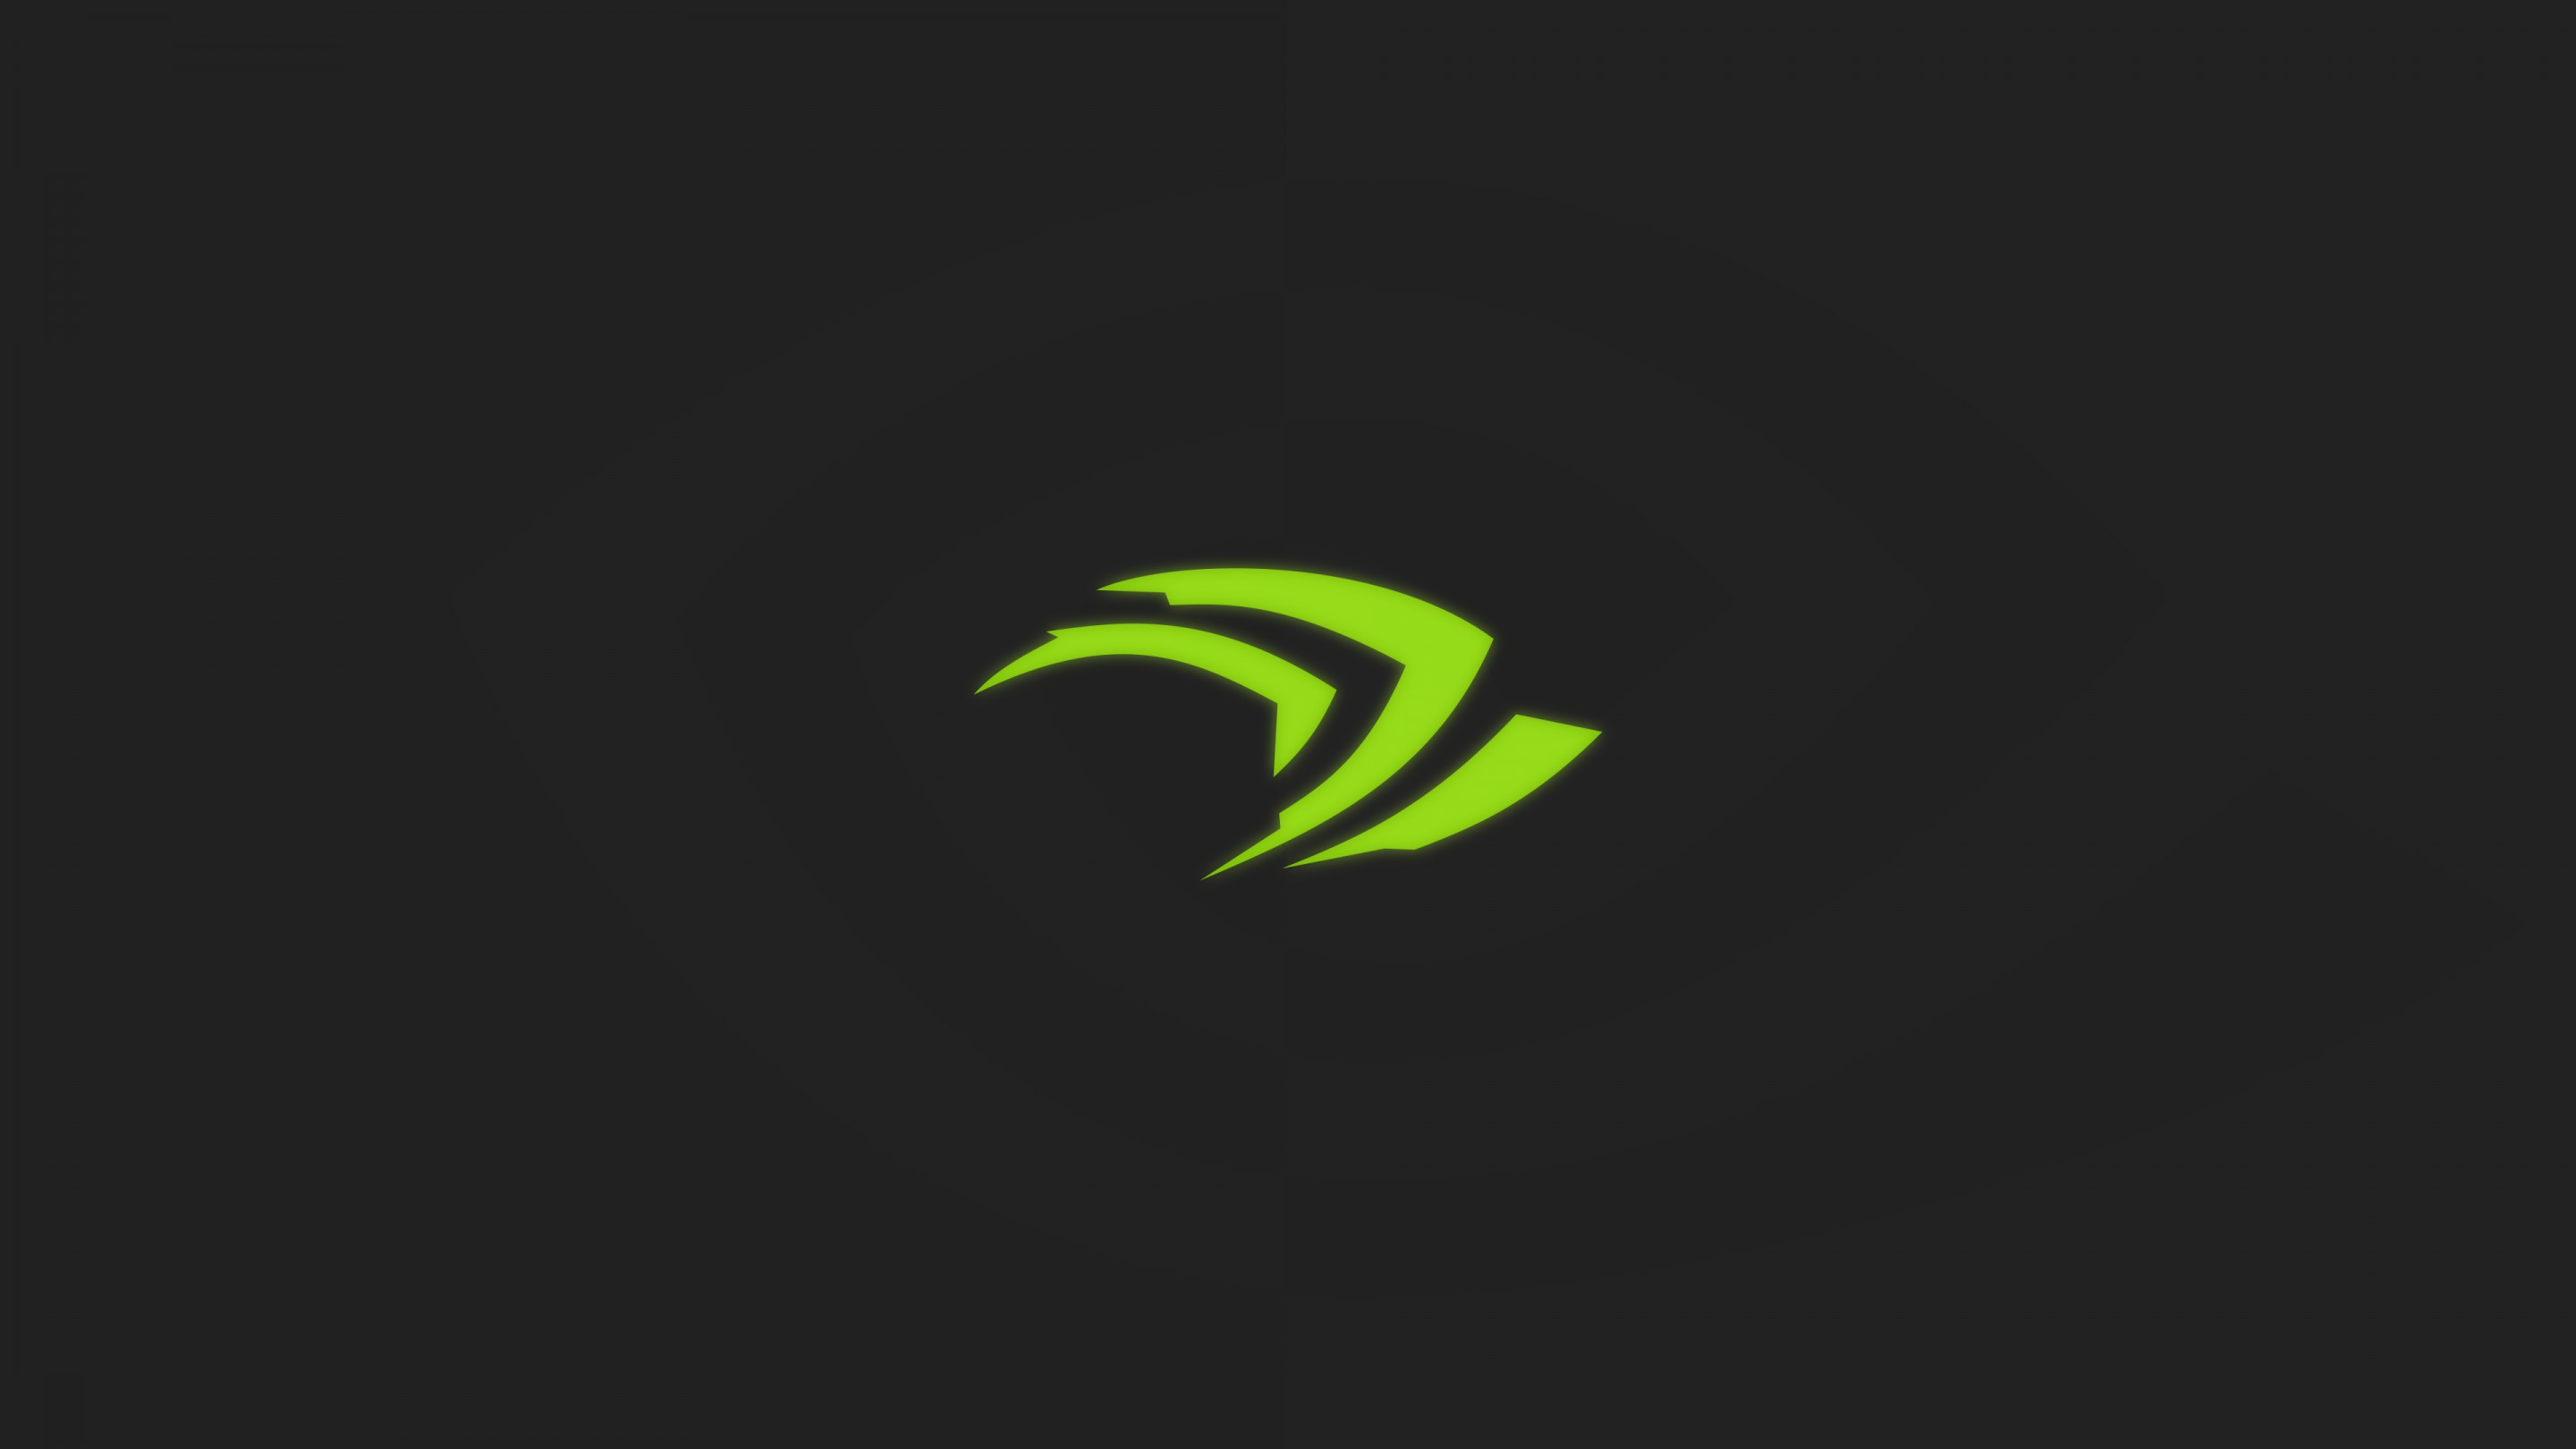 General 2880x1620 Nvidia logo minimalism gray green simple background black background brand